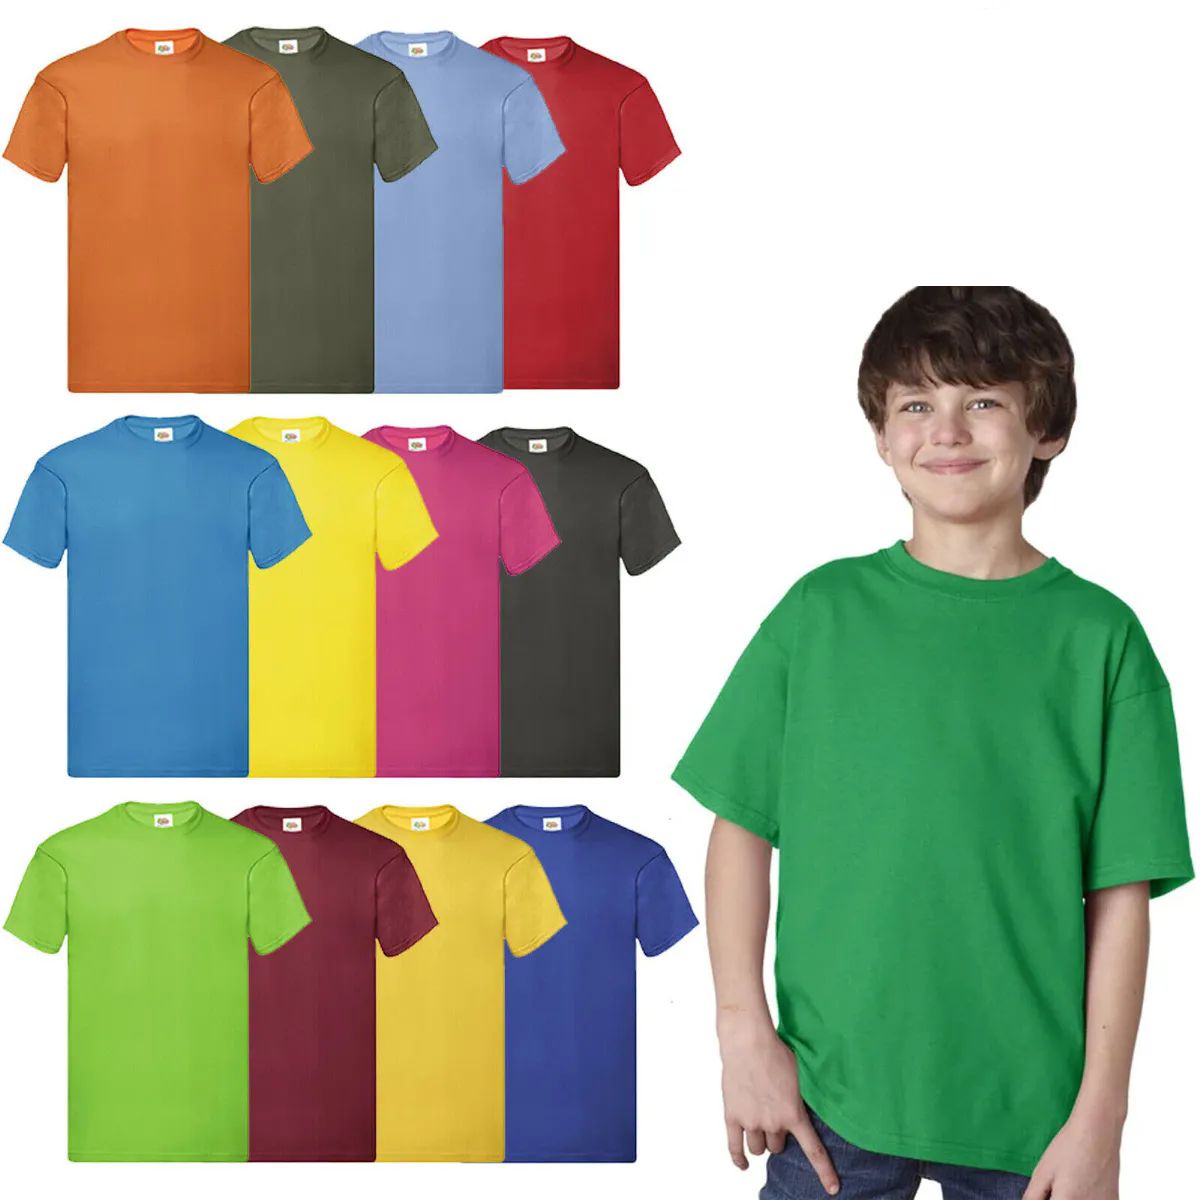 288 Bulk Billion Hats Kids Youth Cotton Assorted Colors T Shirts Size xs